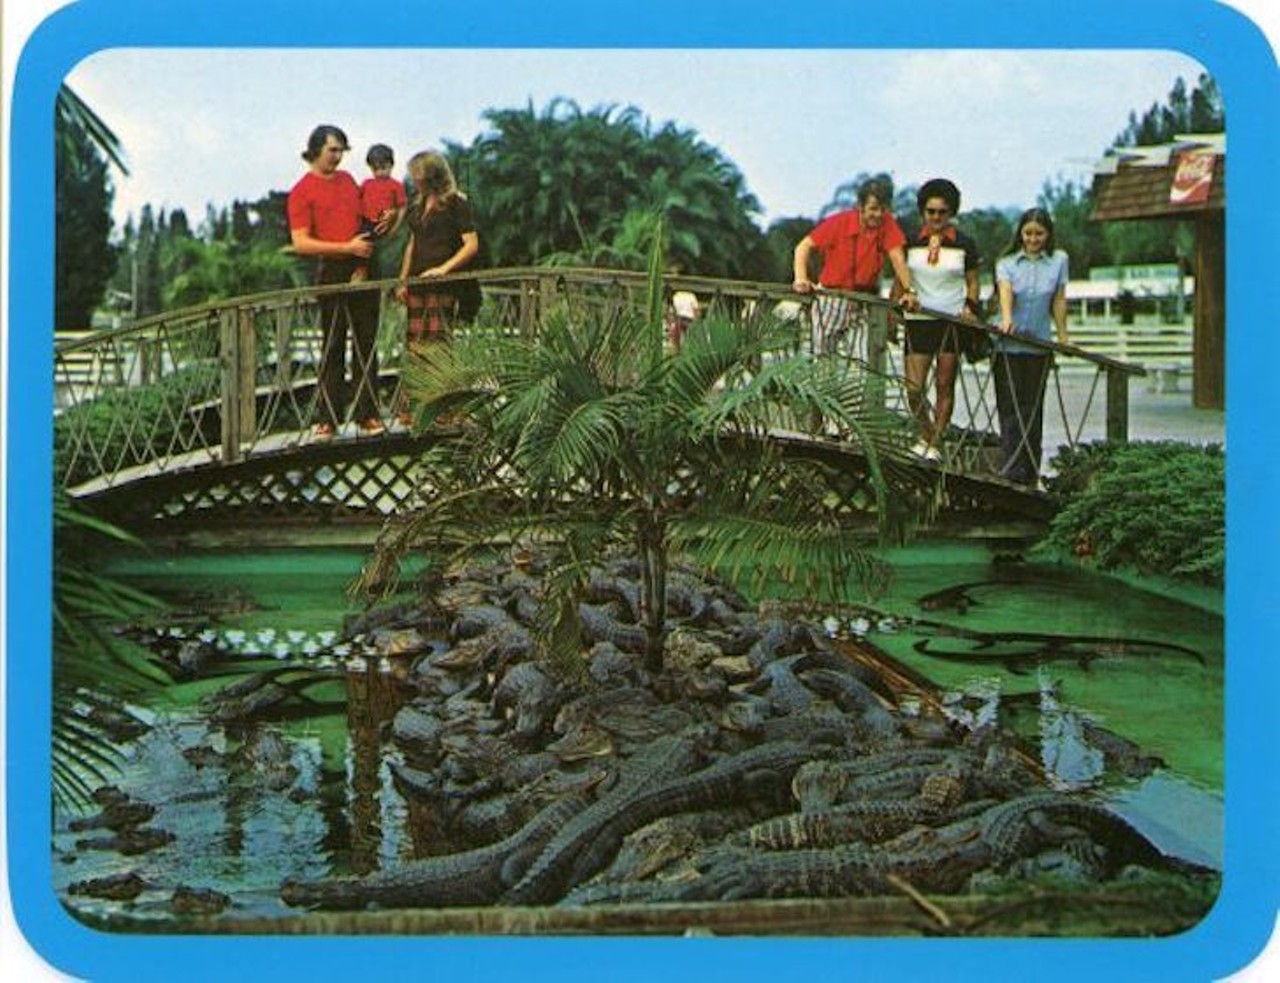 Tourists viewing gators at Gatorland, published after 1949.